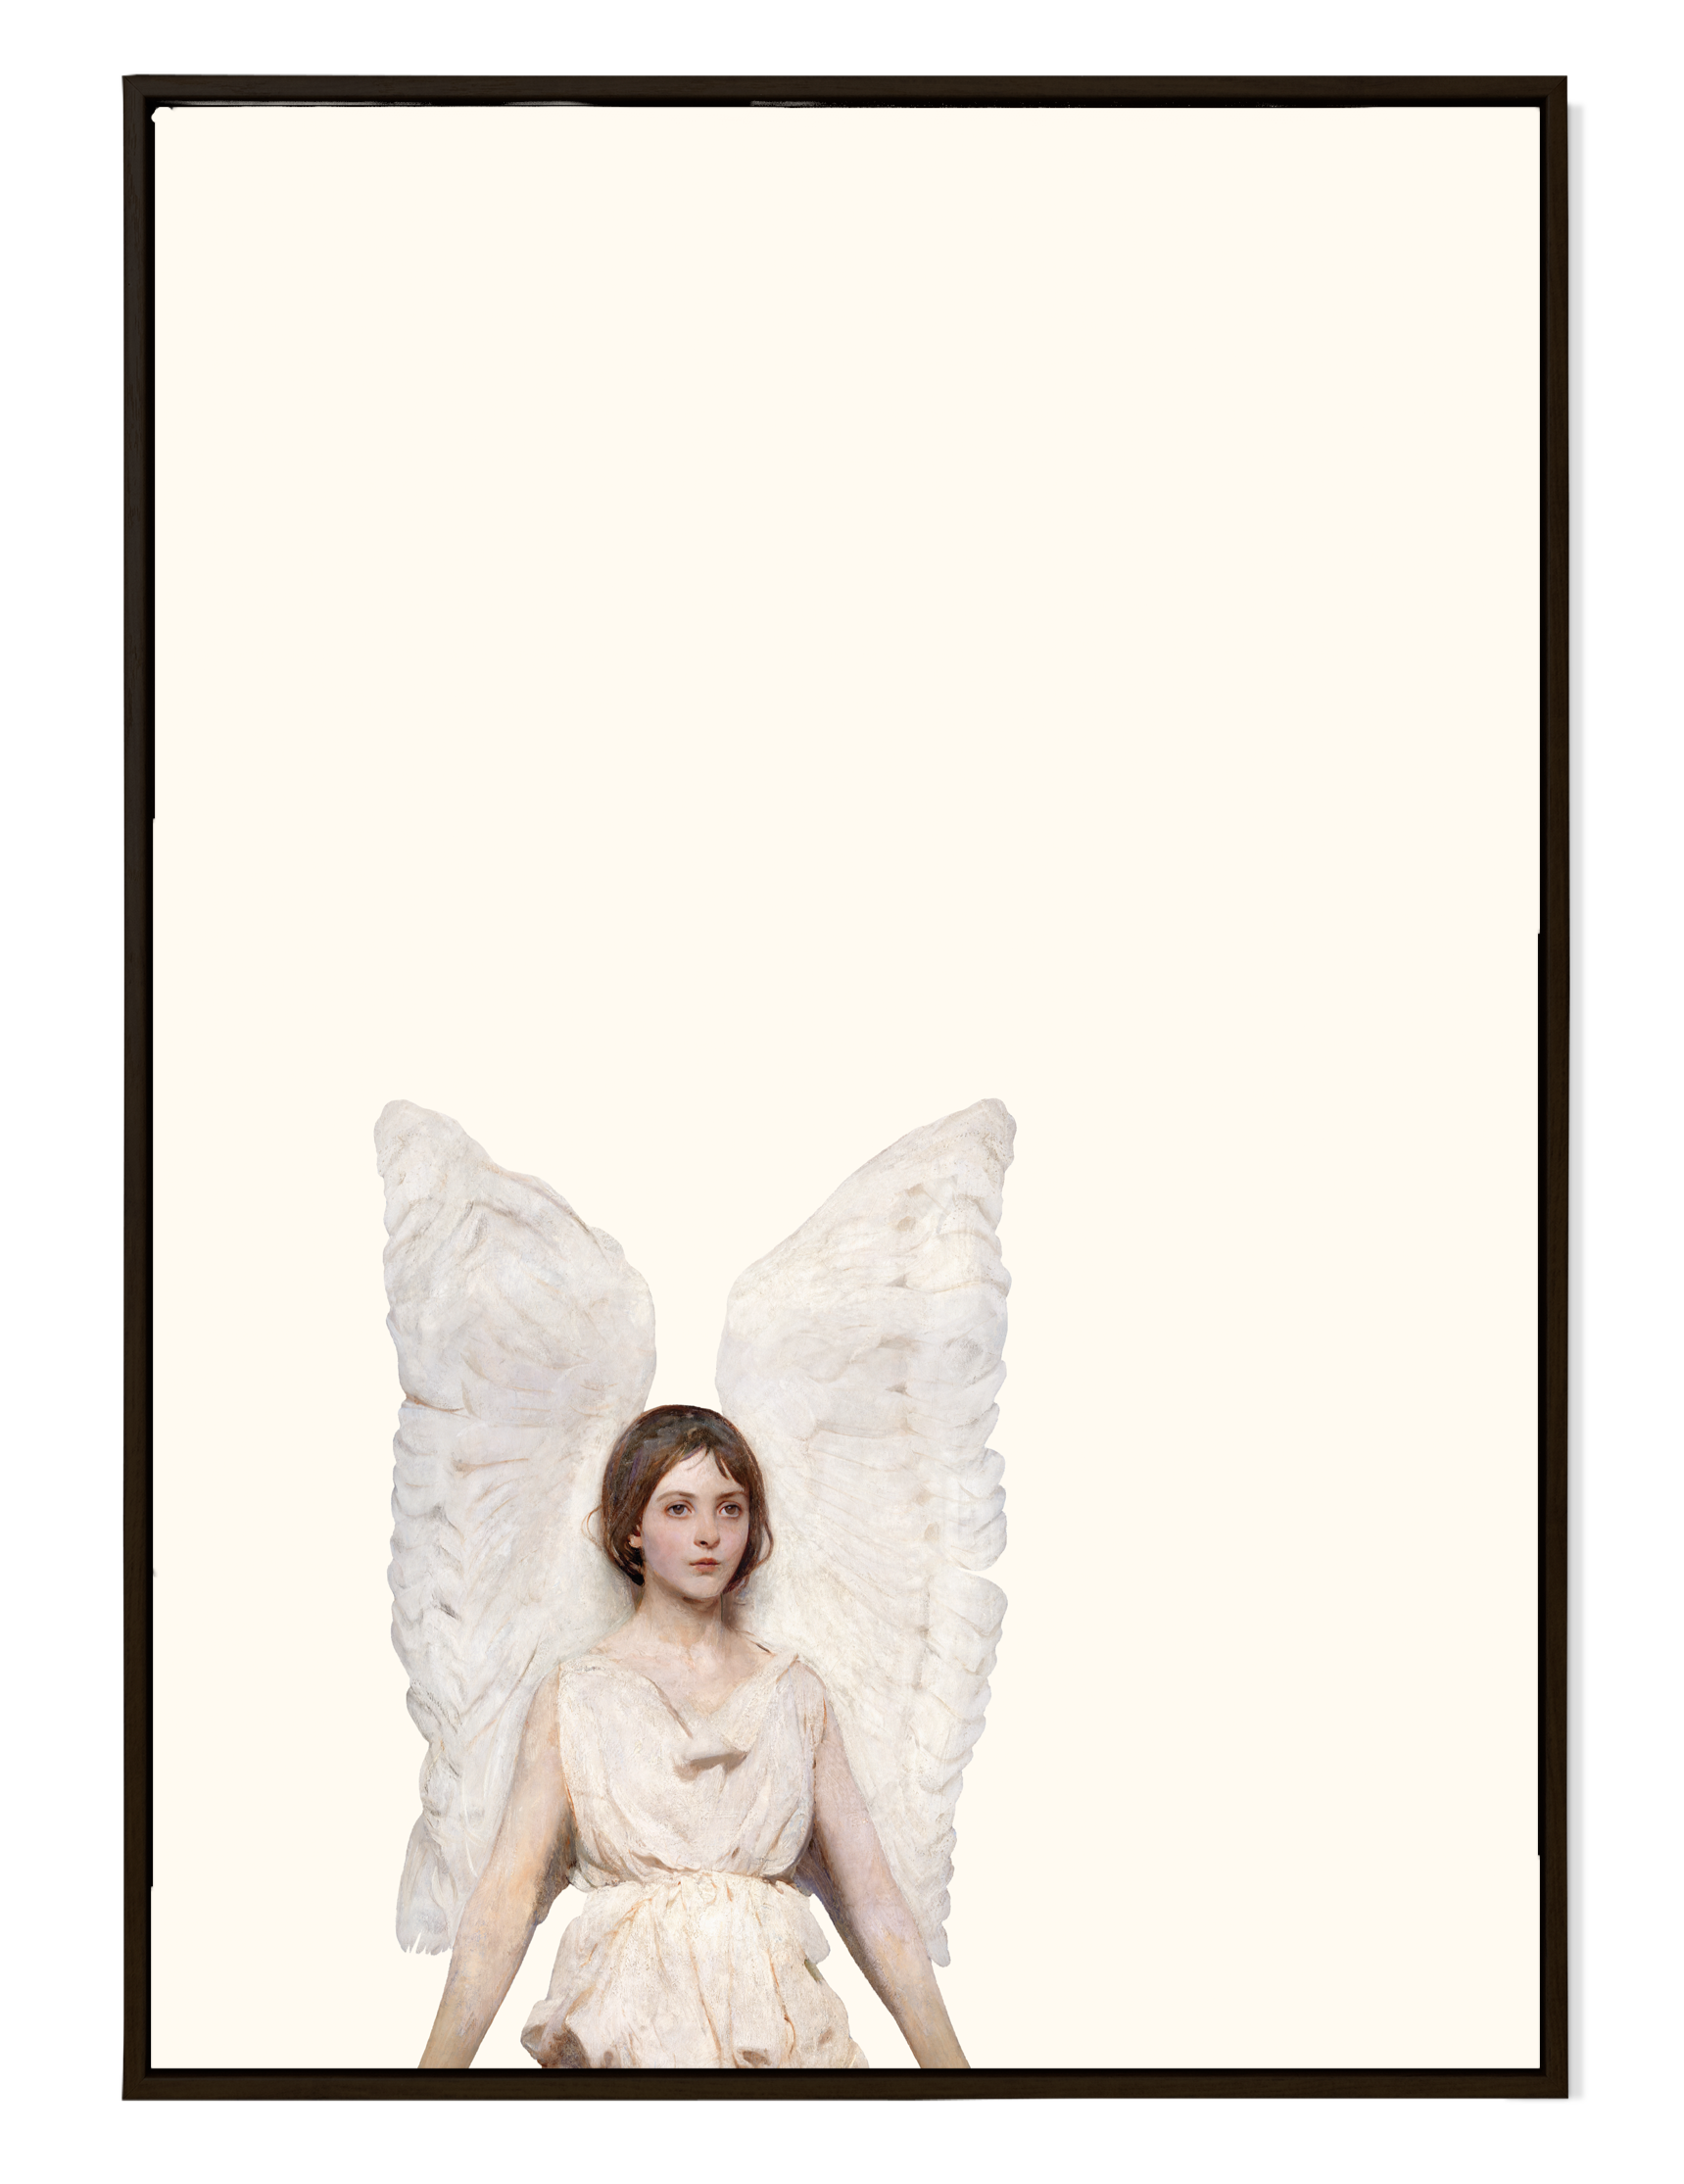 ANGEL poster